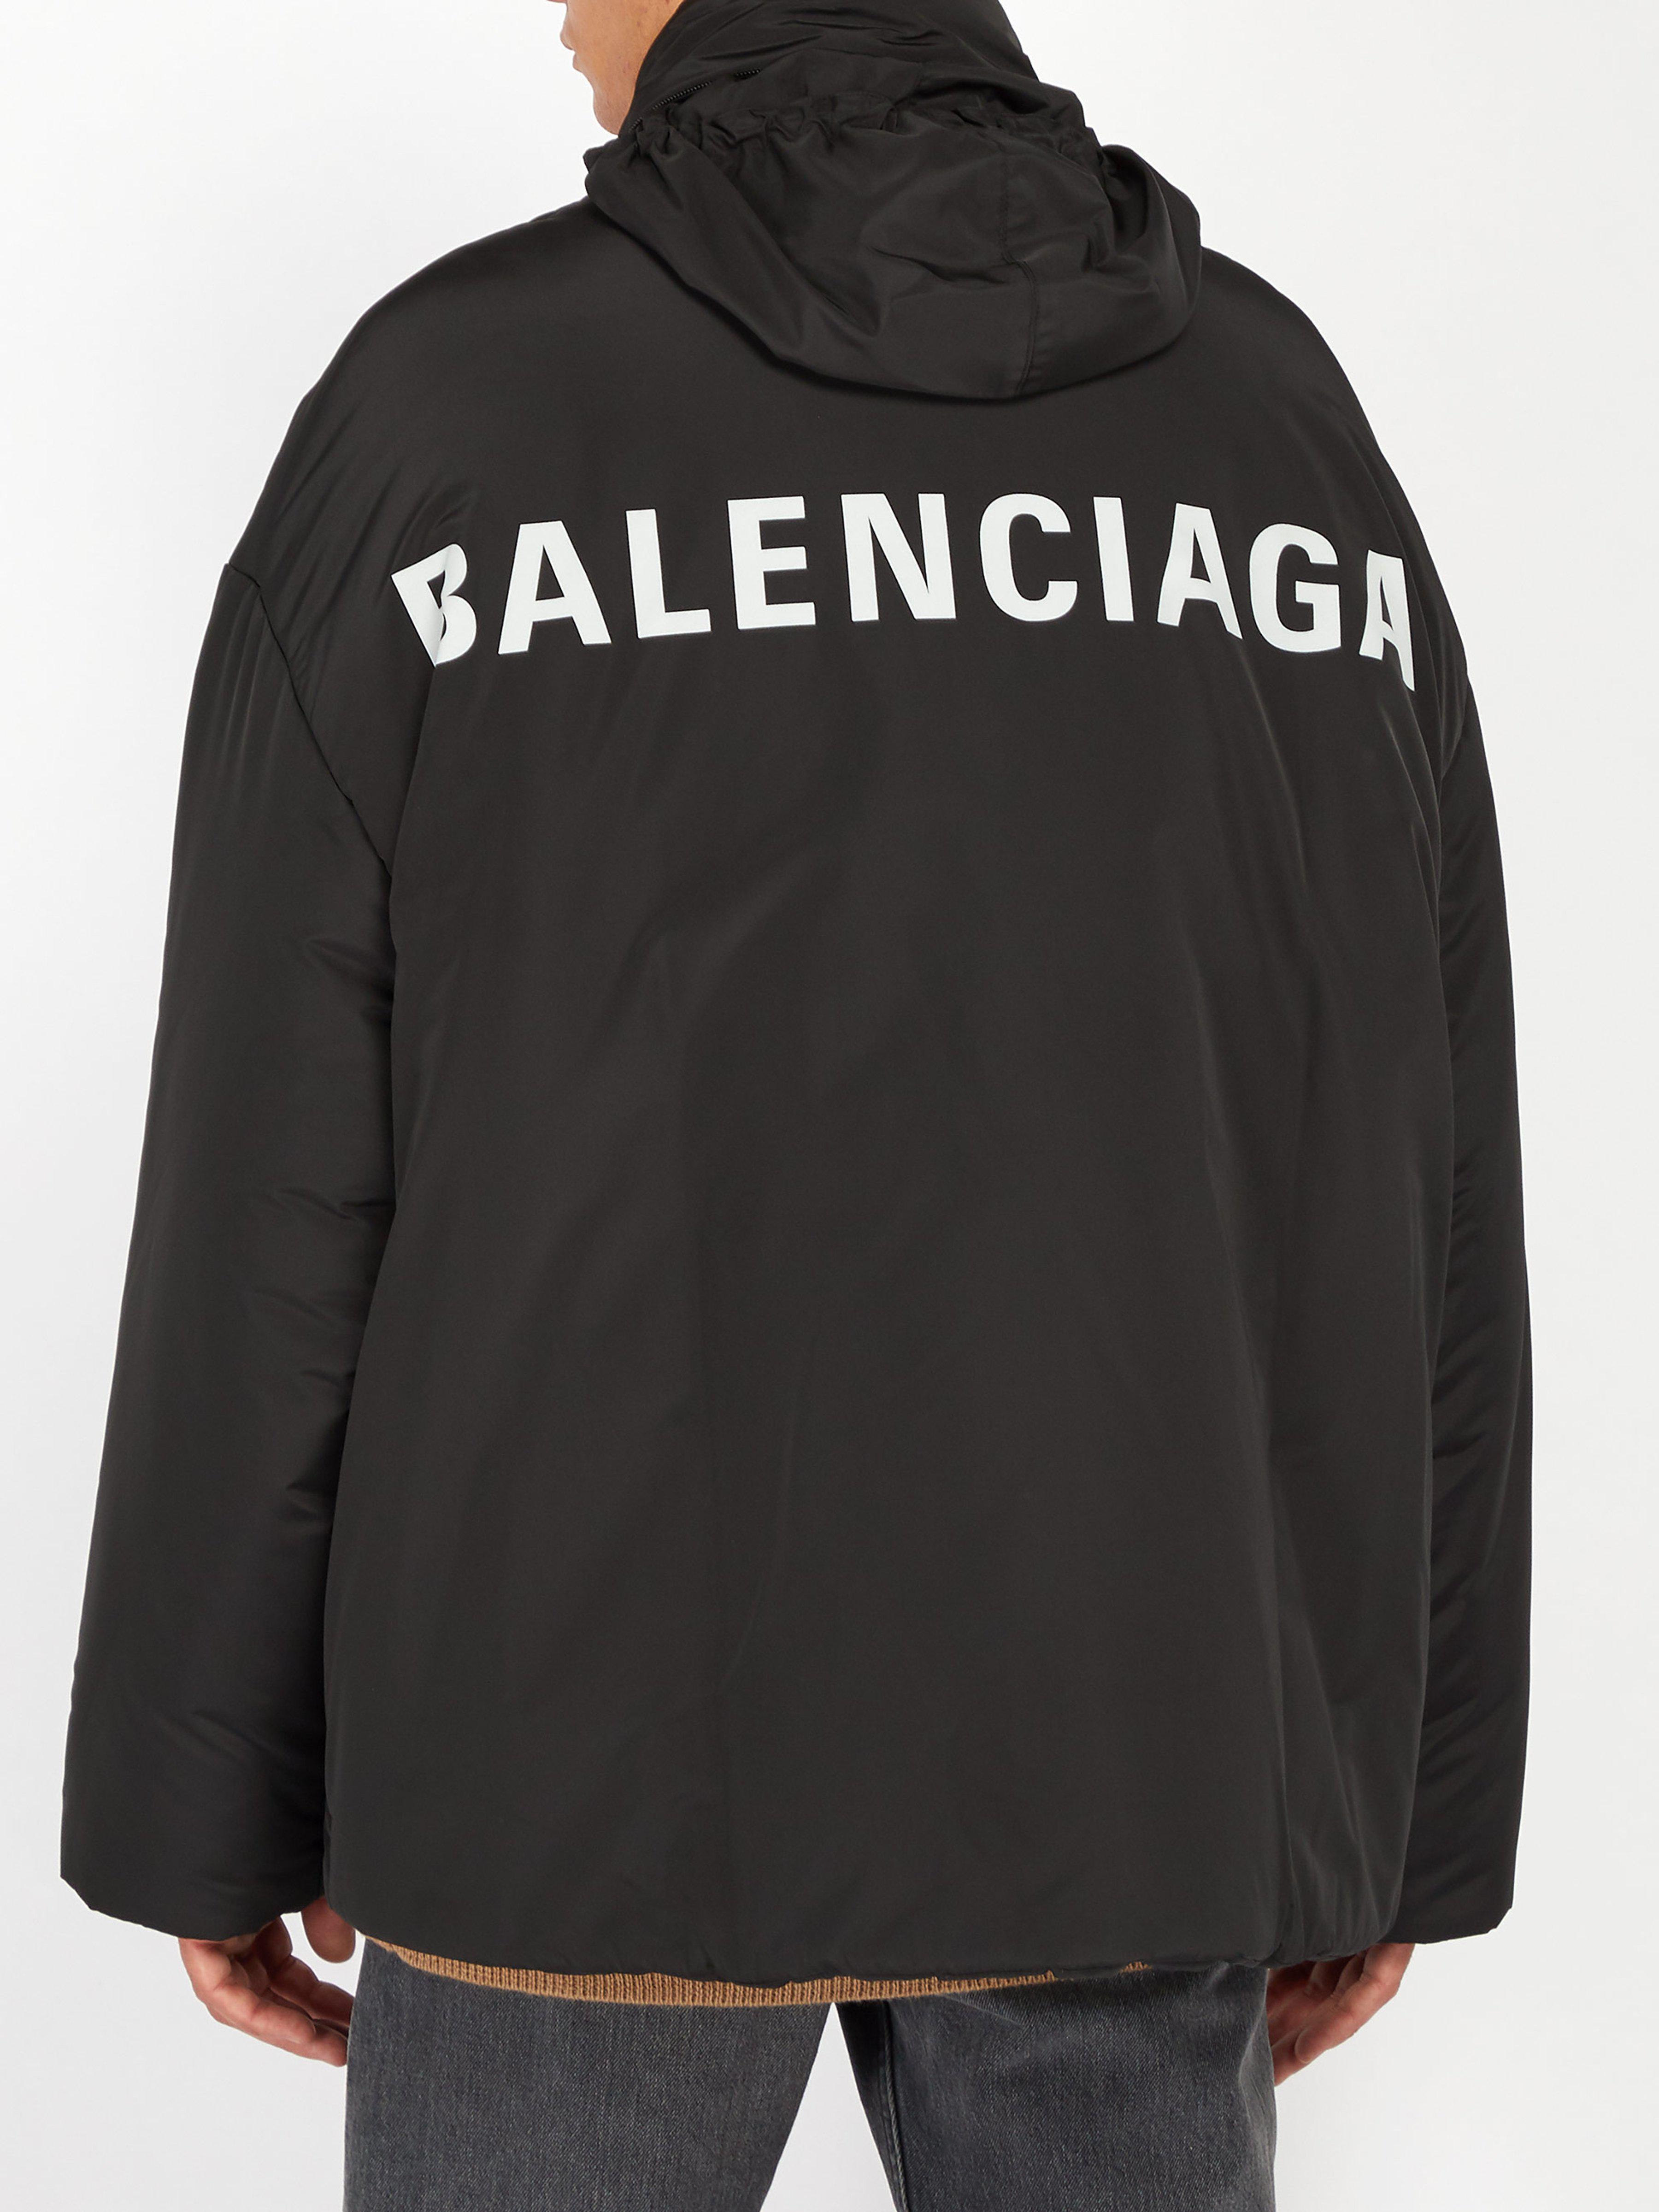 Balenciaga Logo Windbreaker Jacket in Black for Men | Lyst Australia